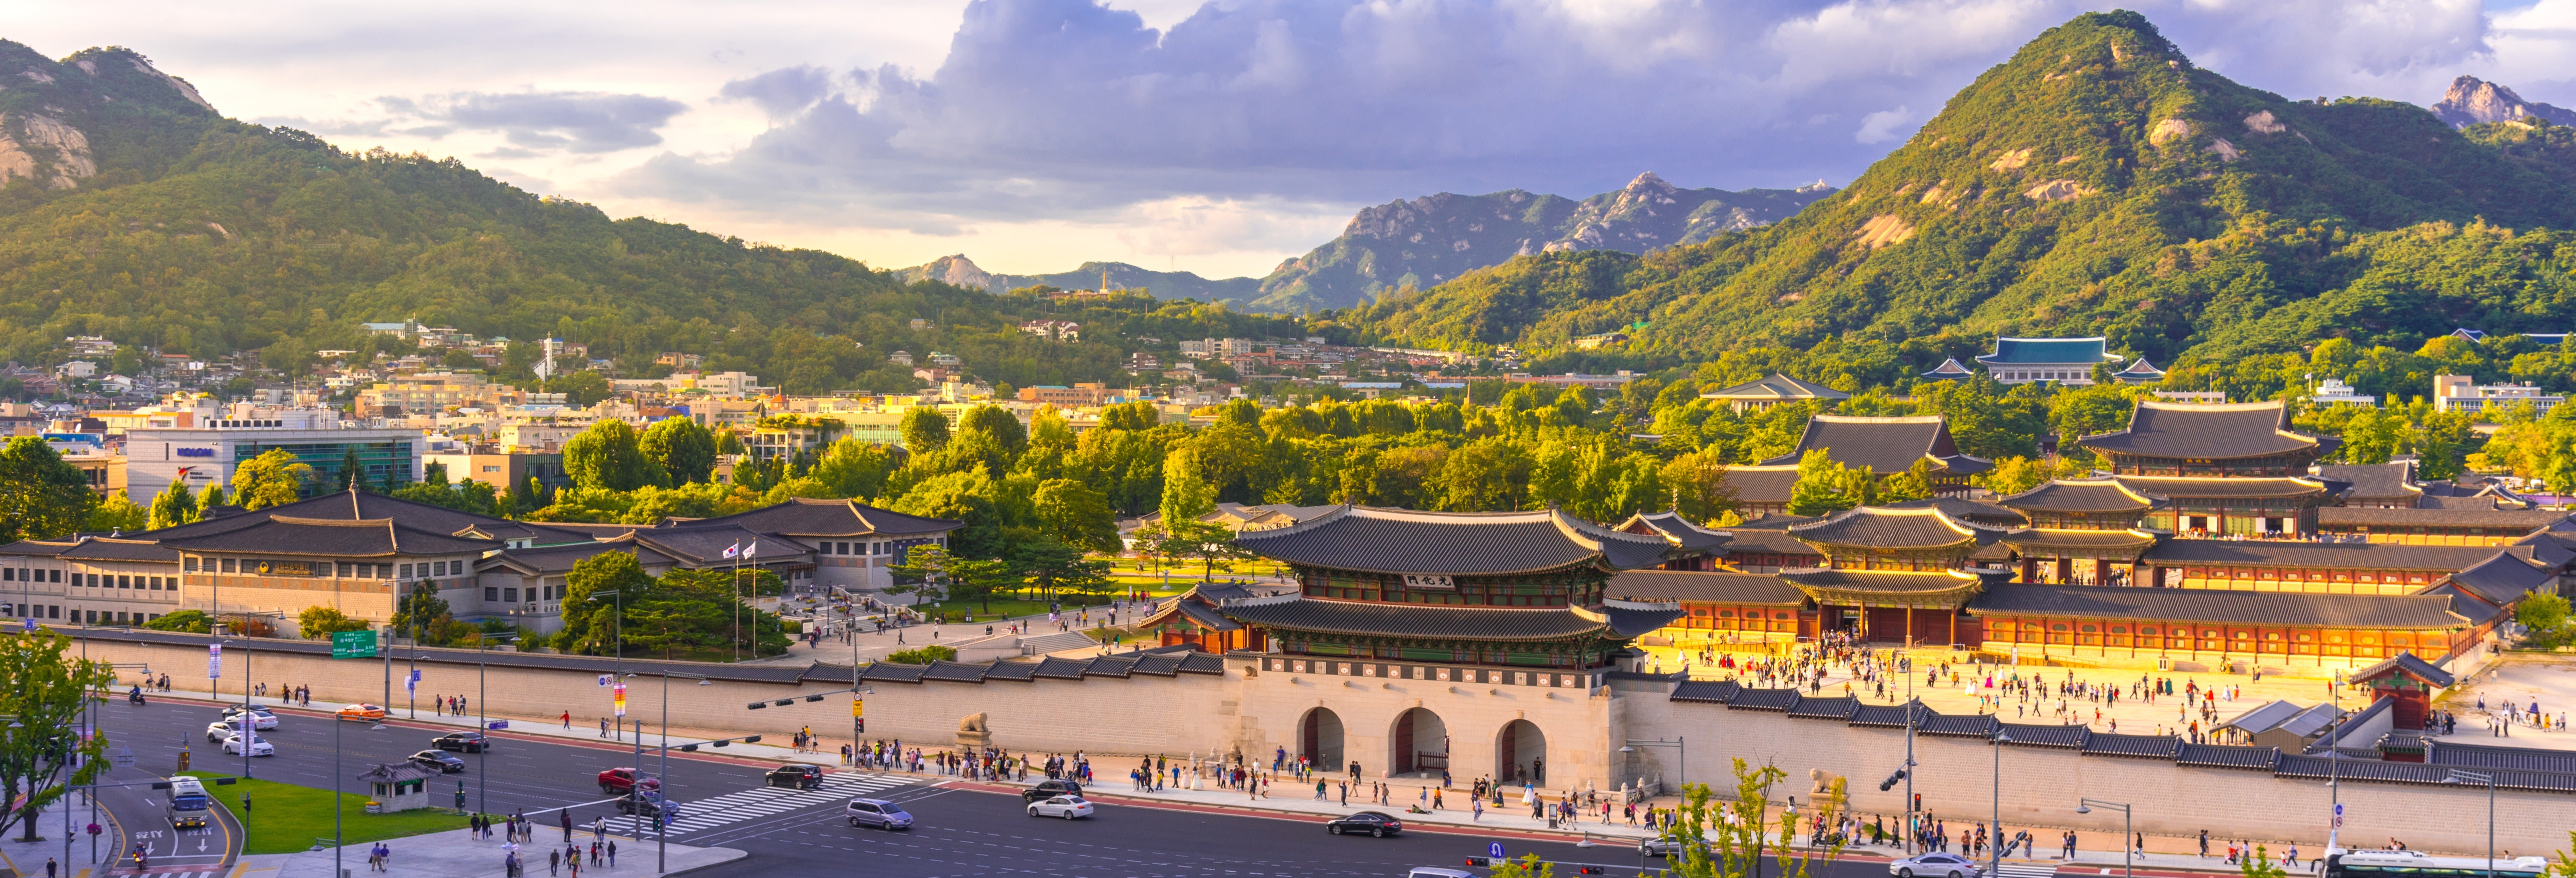 Tour pelo palácio Gyeongbokgung e Bukchon Hanok